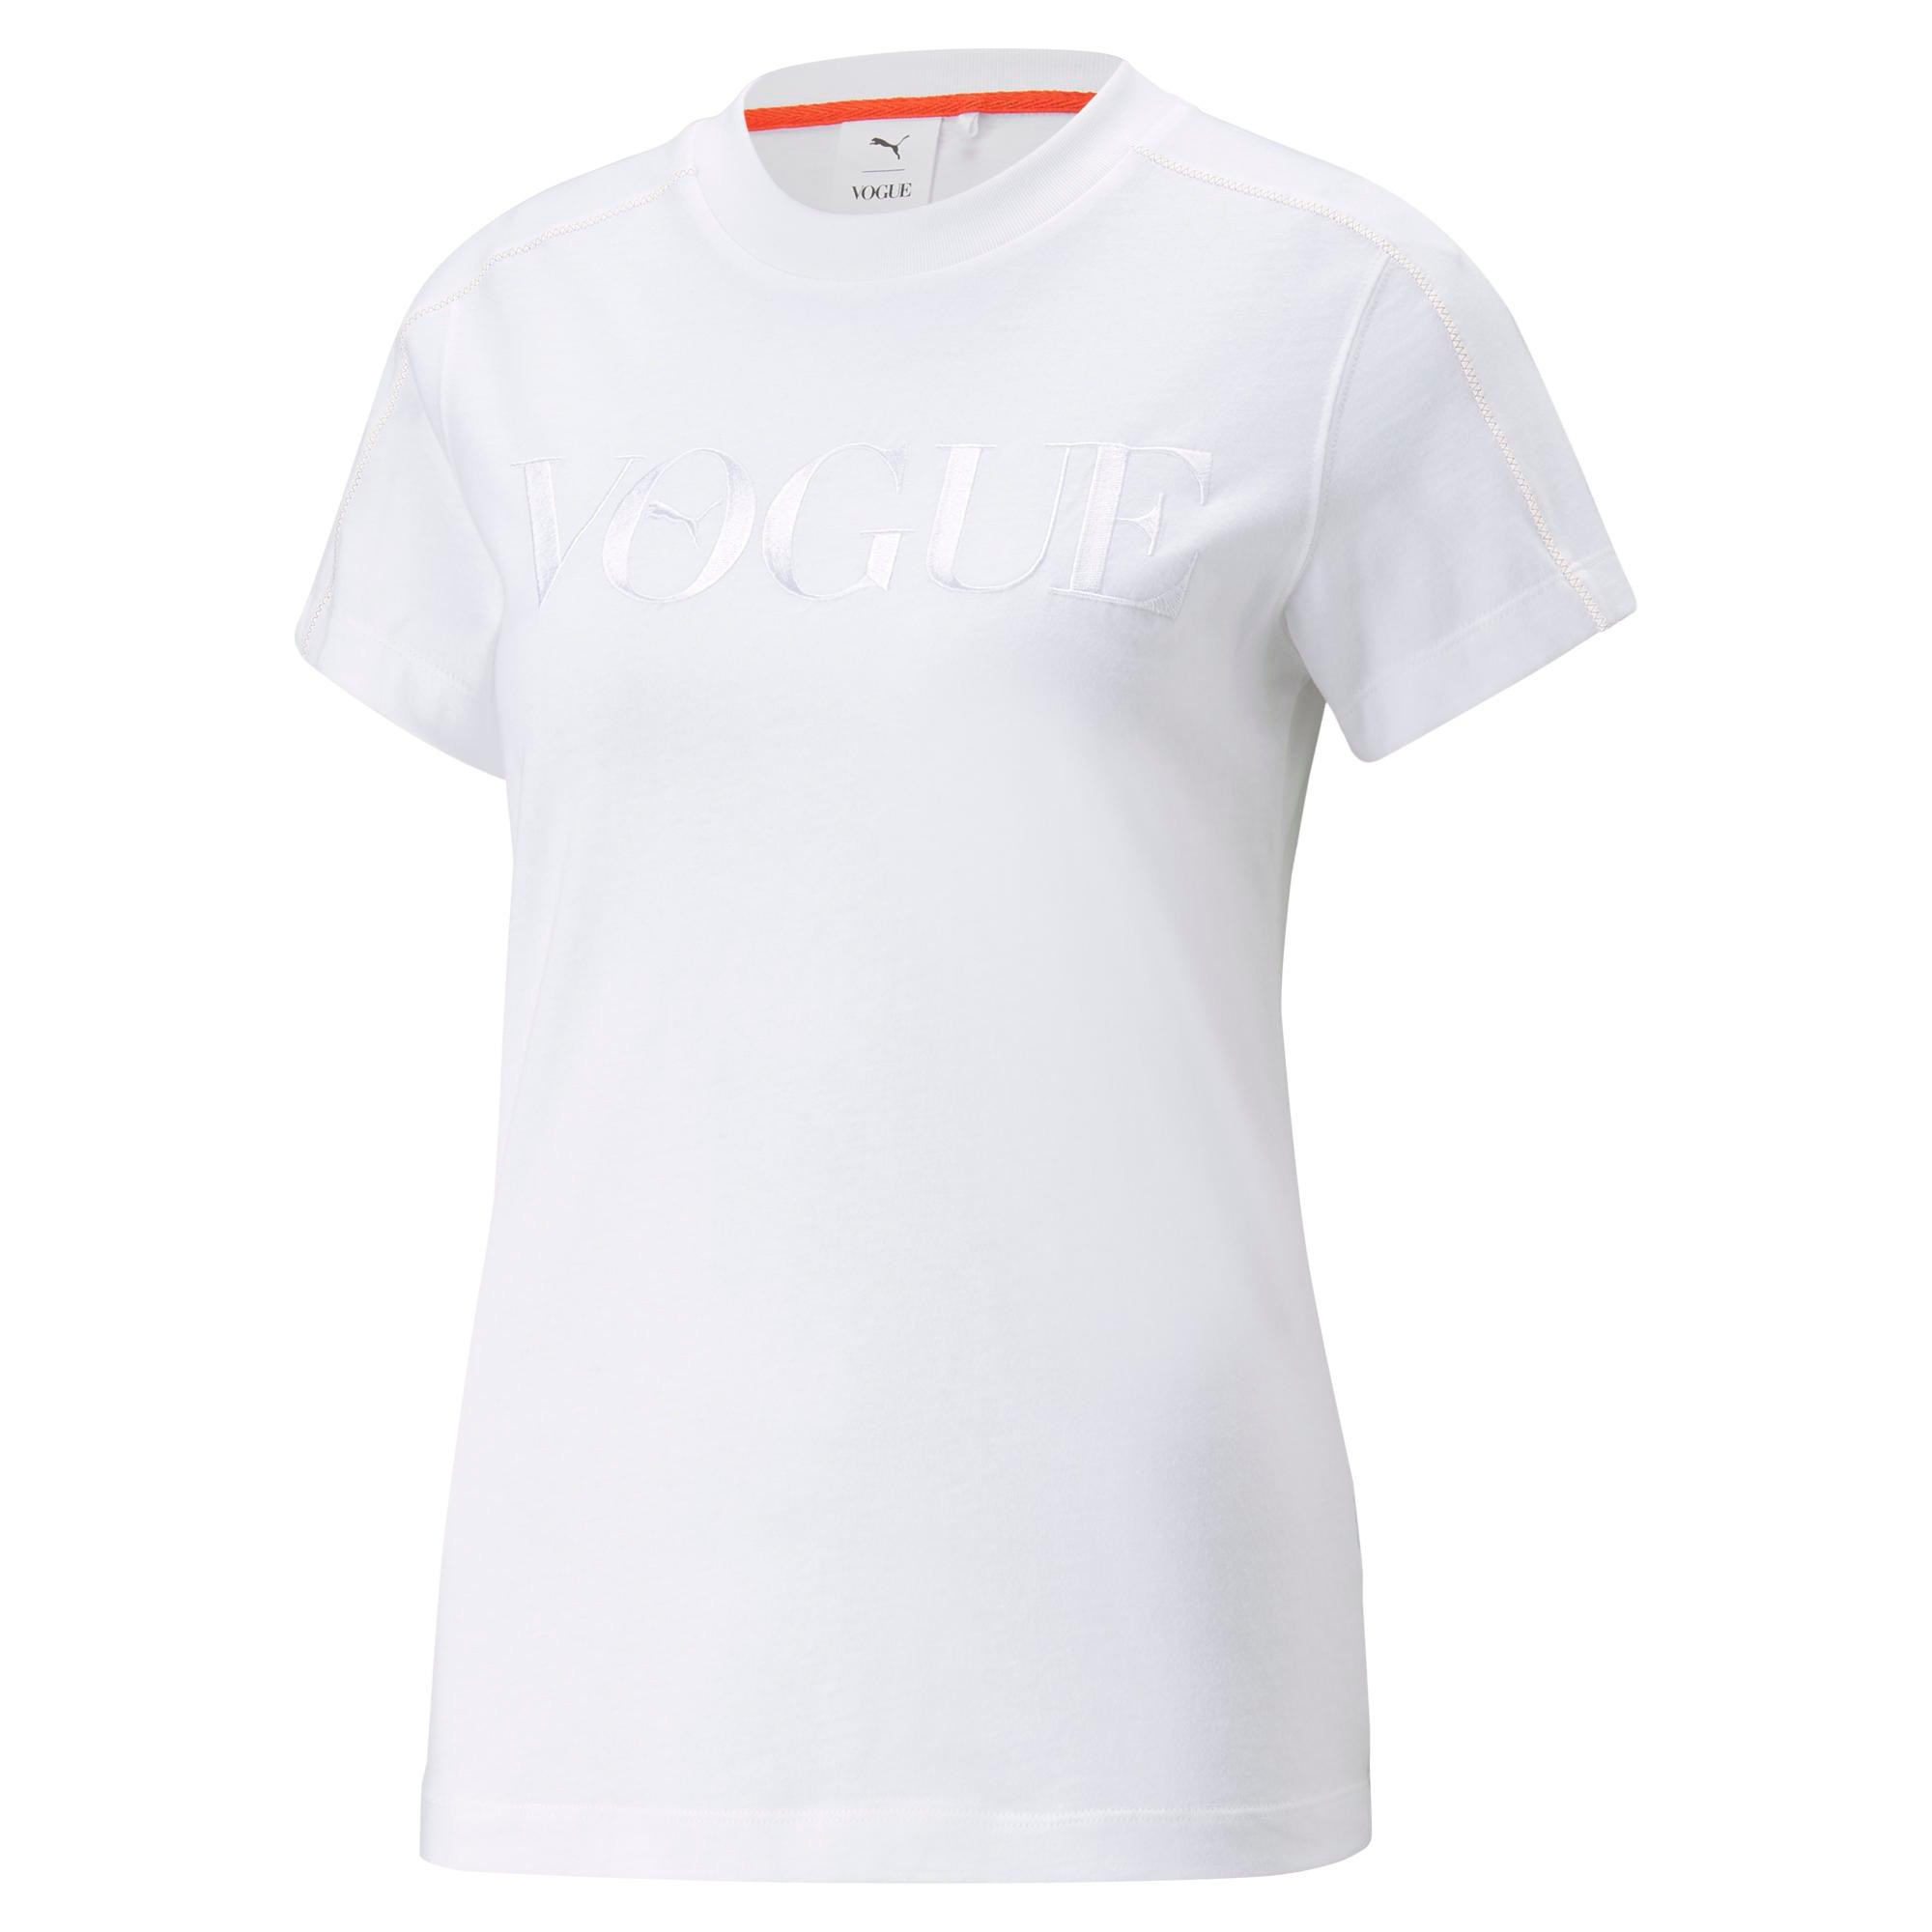 T-shirt Puma x Vogue, Bianco, large image number 0